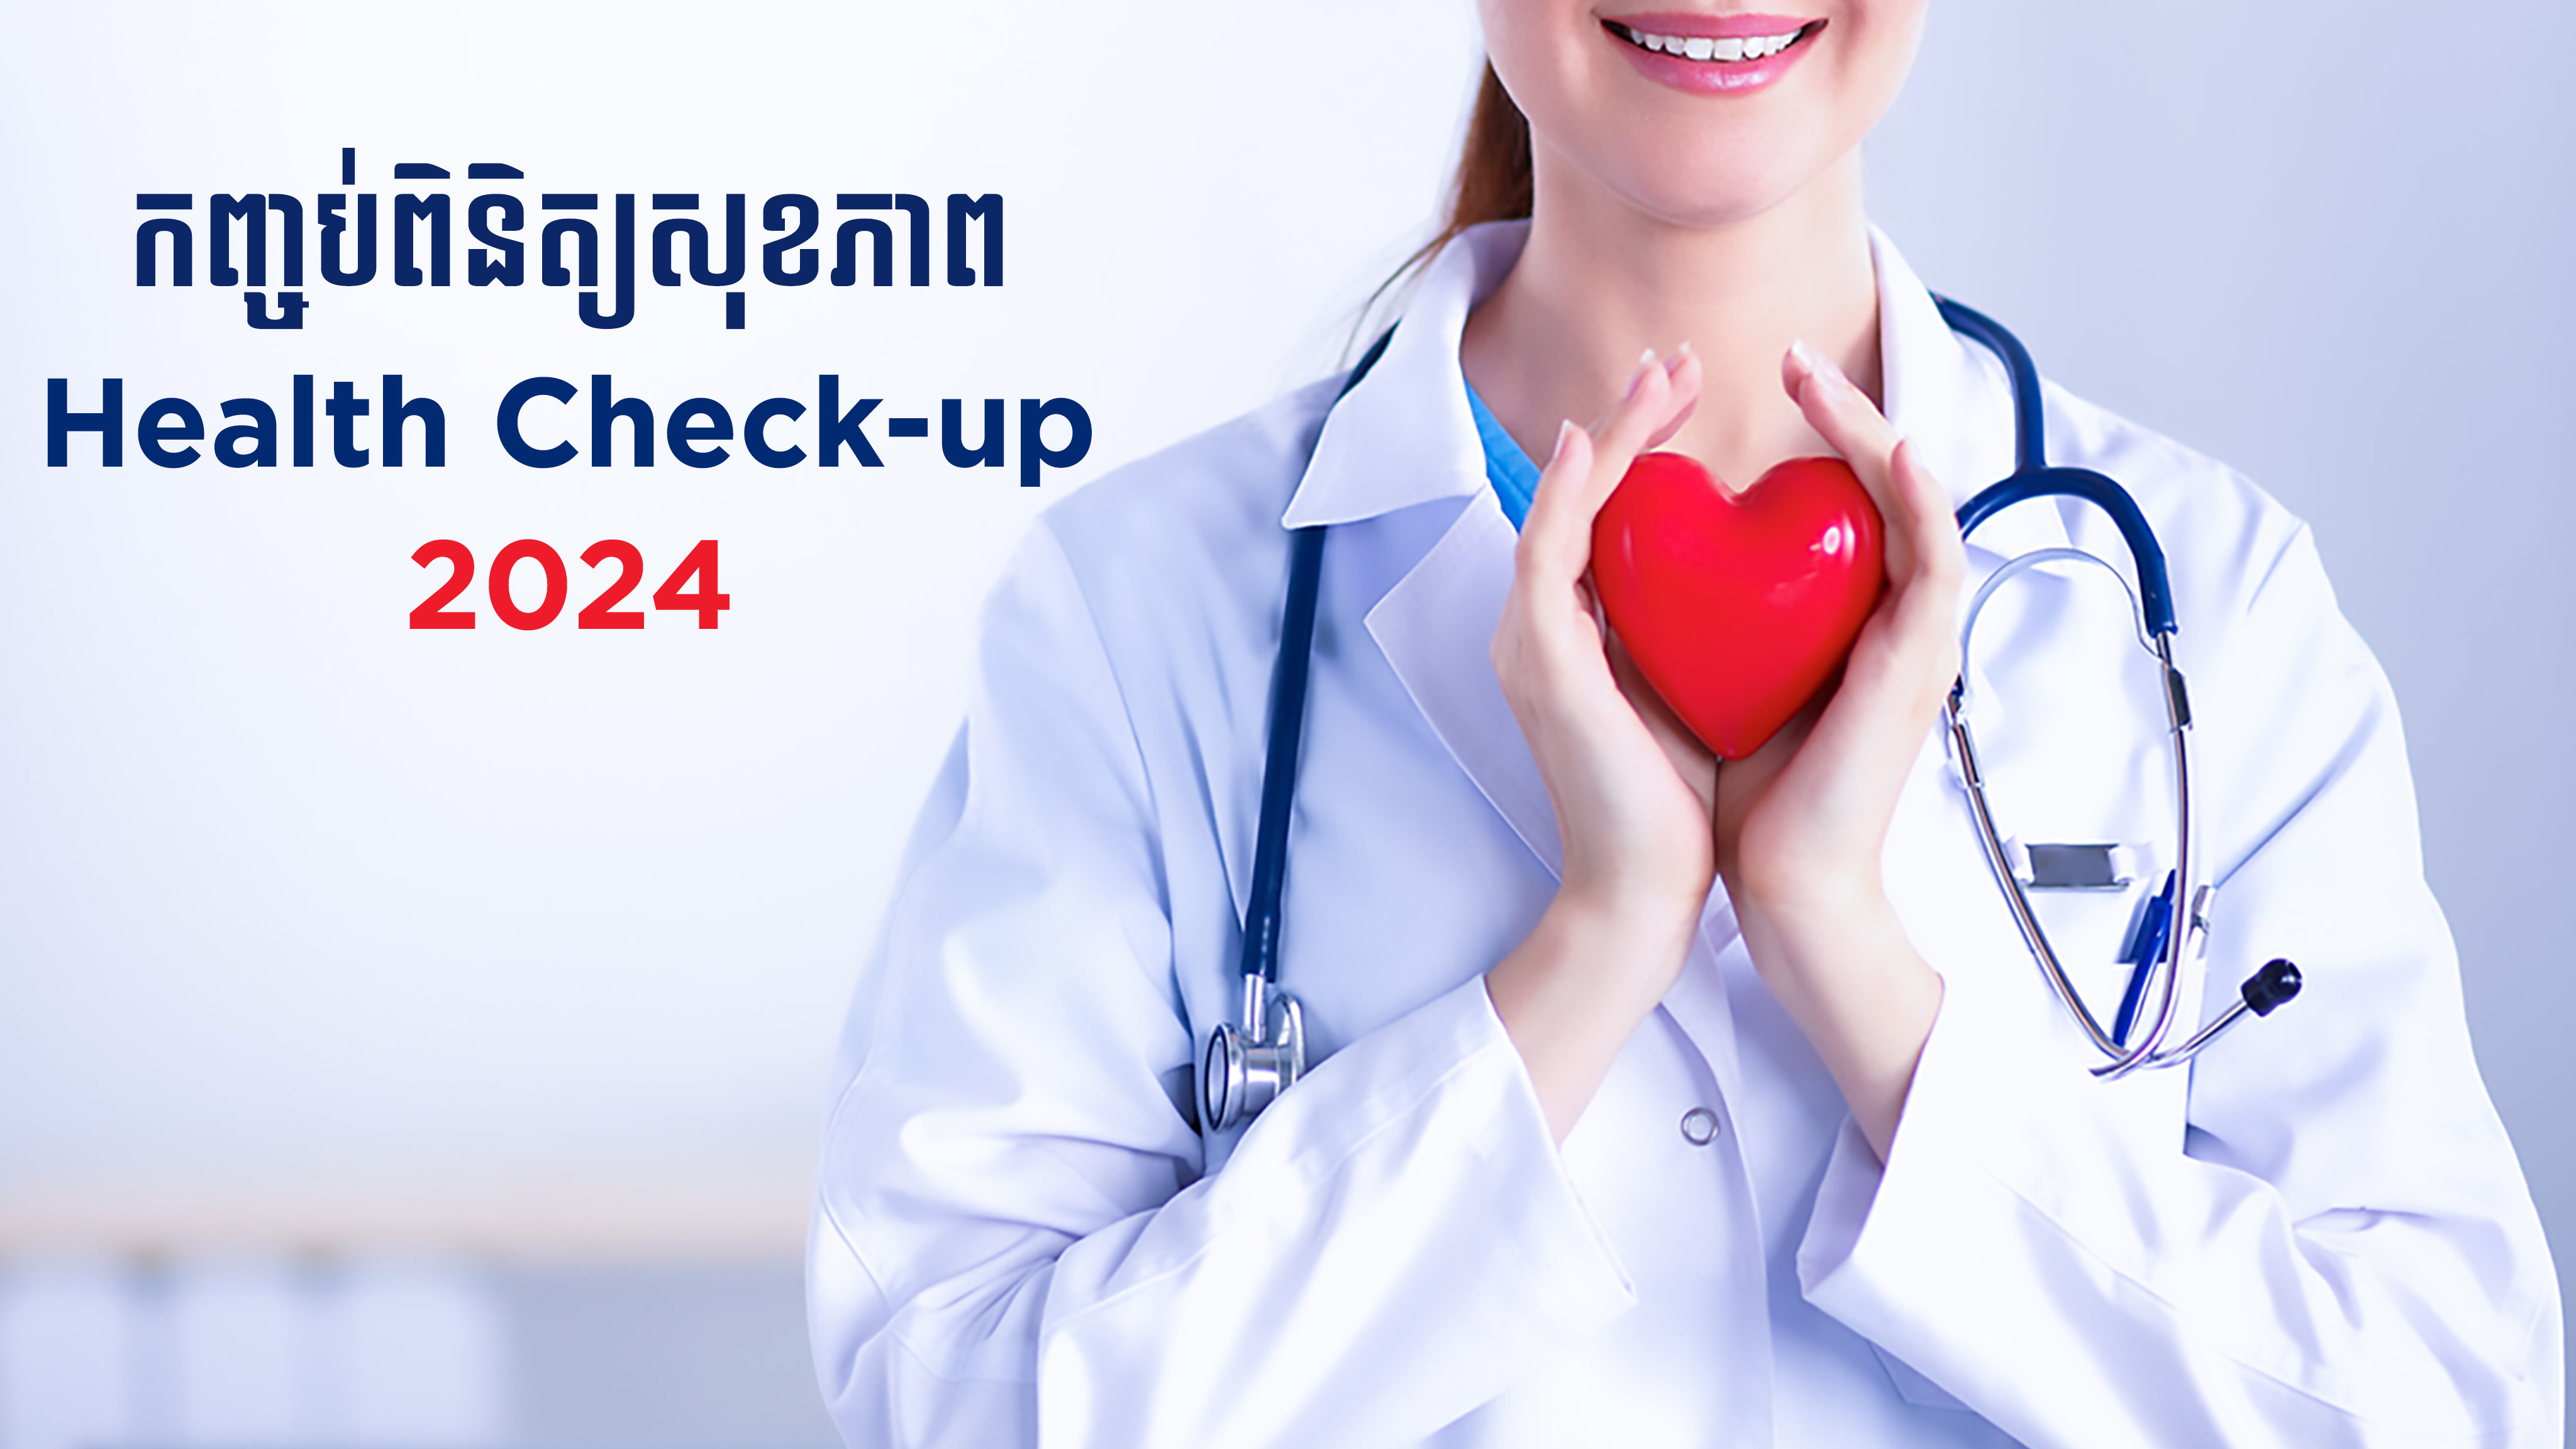 Health check up program